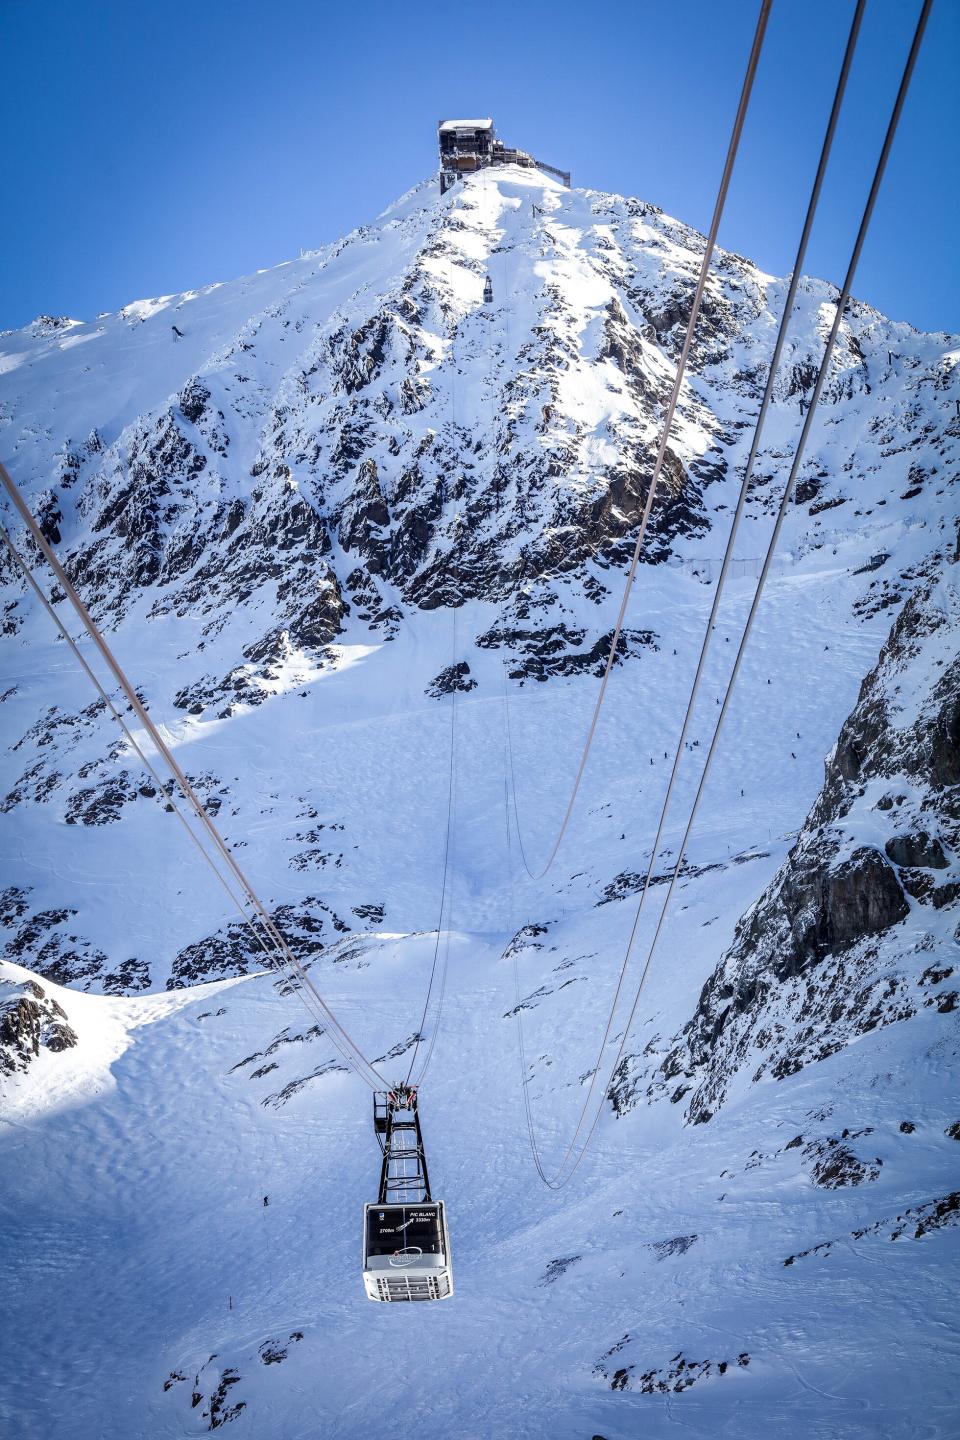 slopes of the Alpe d'Huez